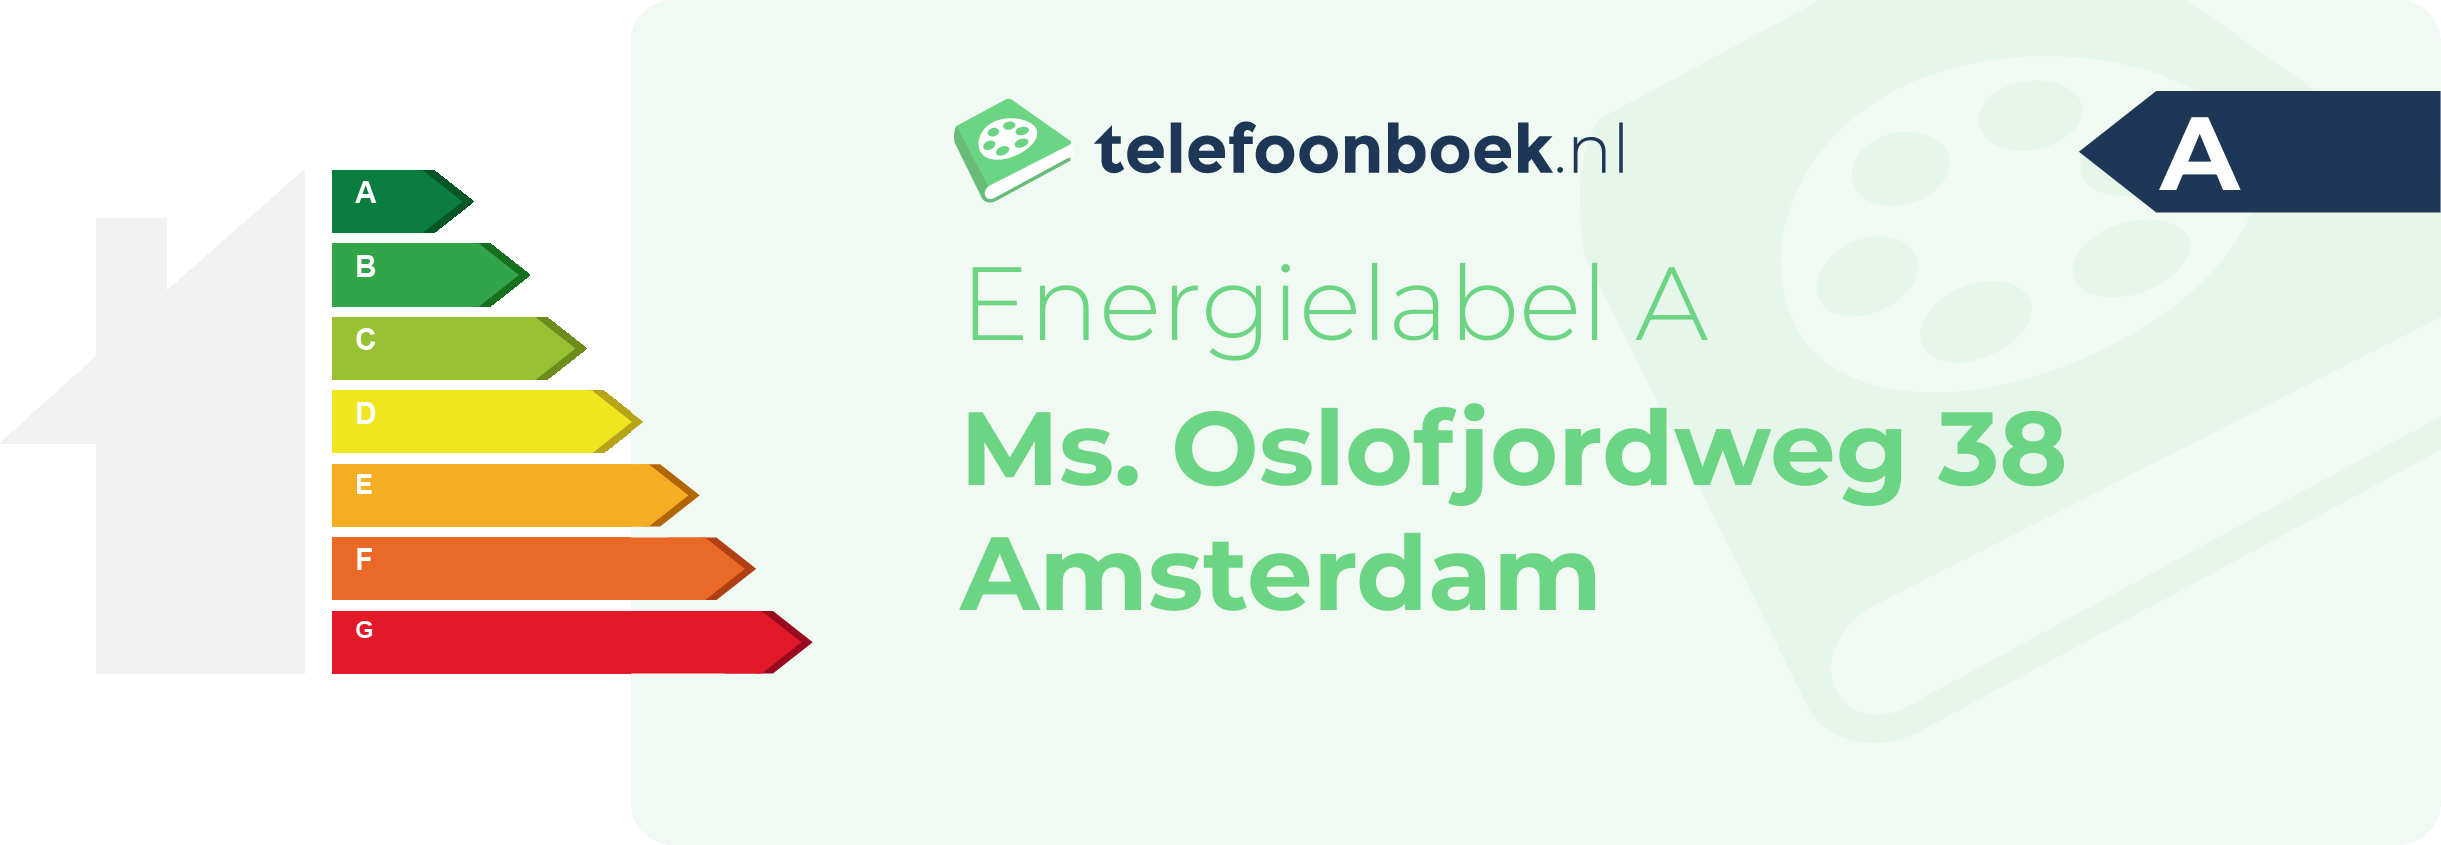 Energielabel Ms. Oslofjordweg 38 Amsterdam